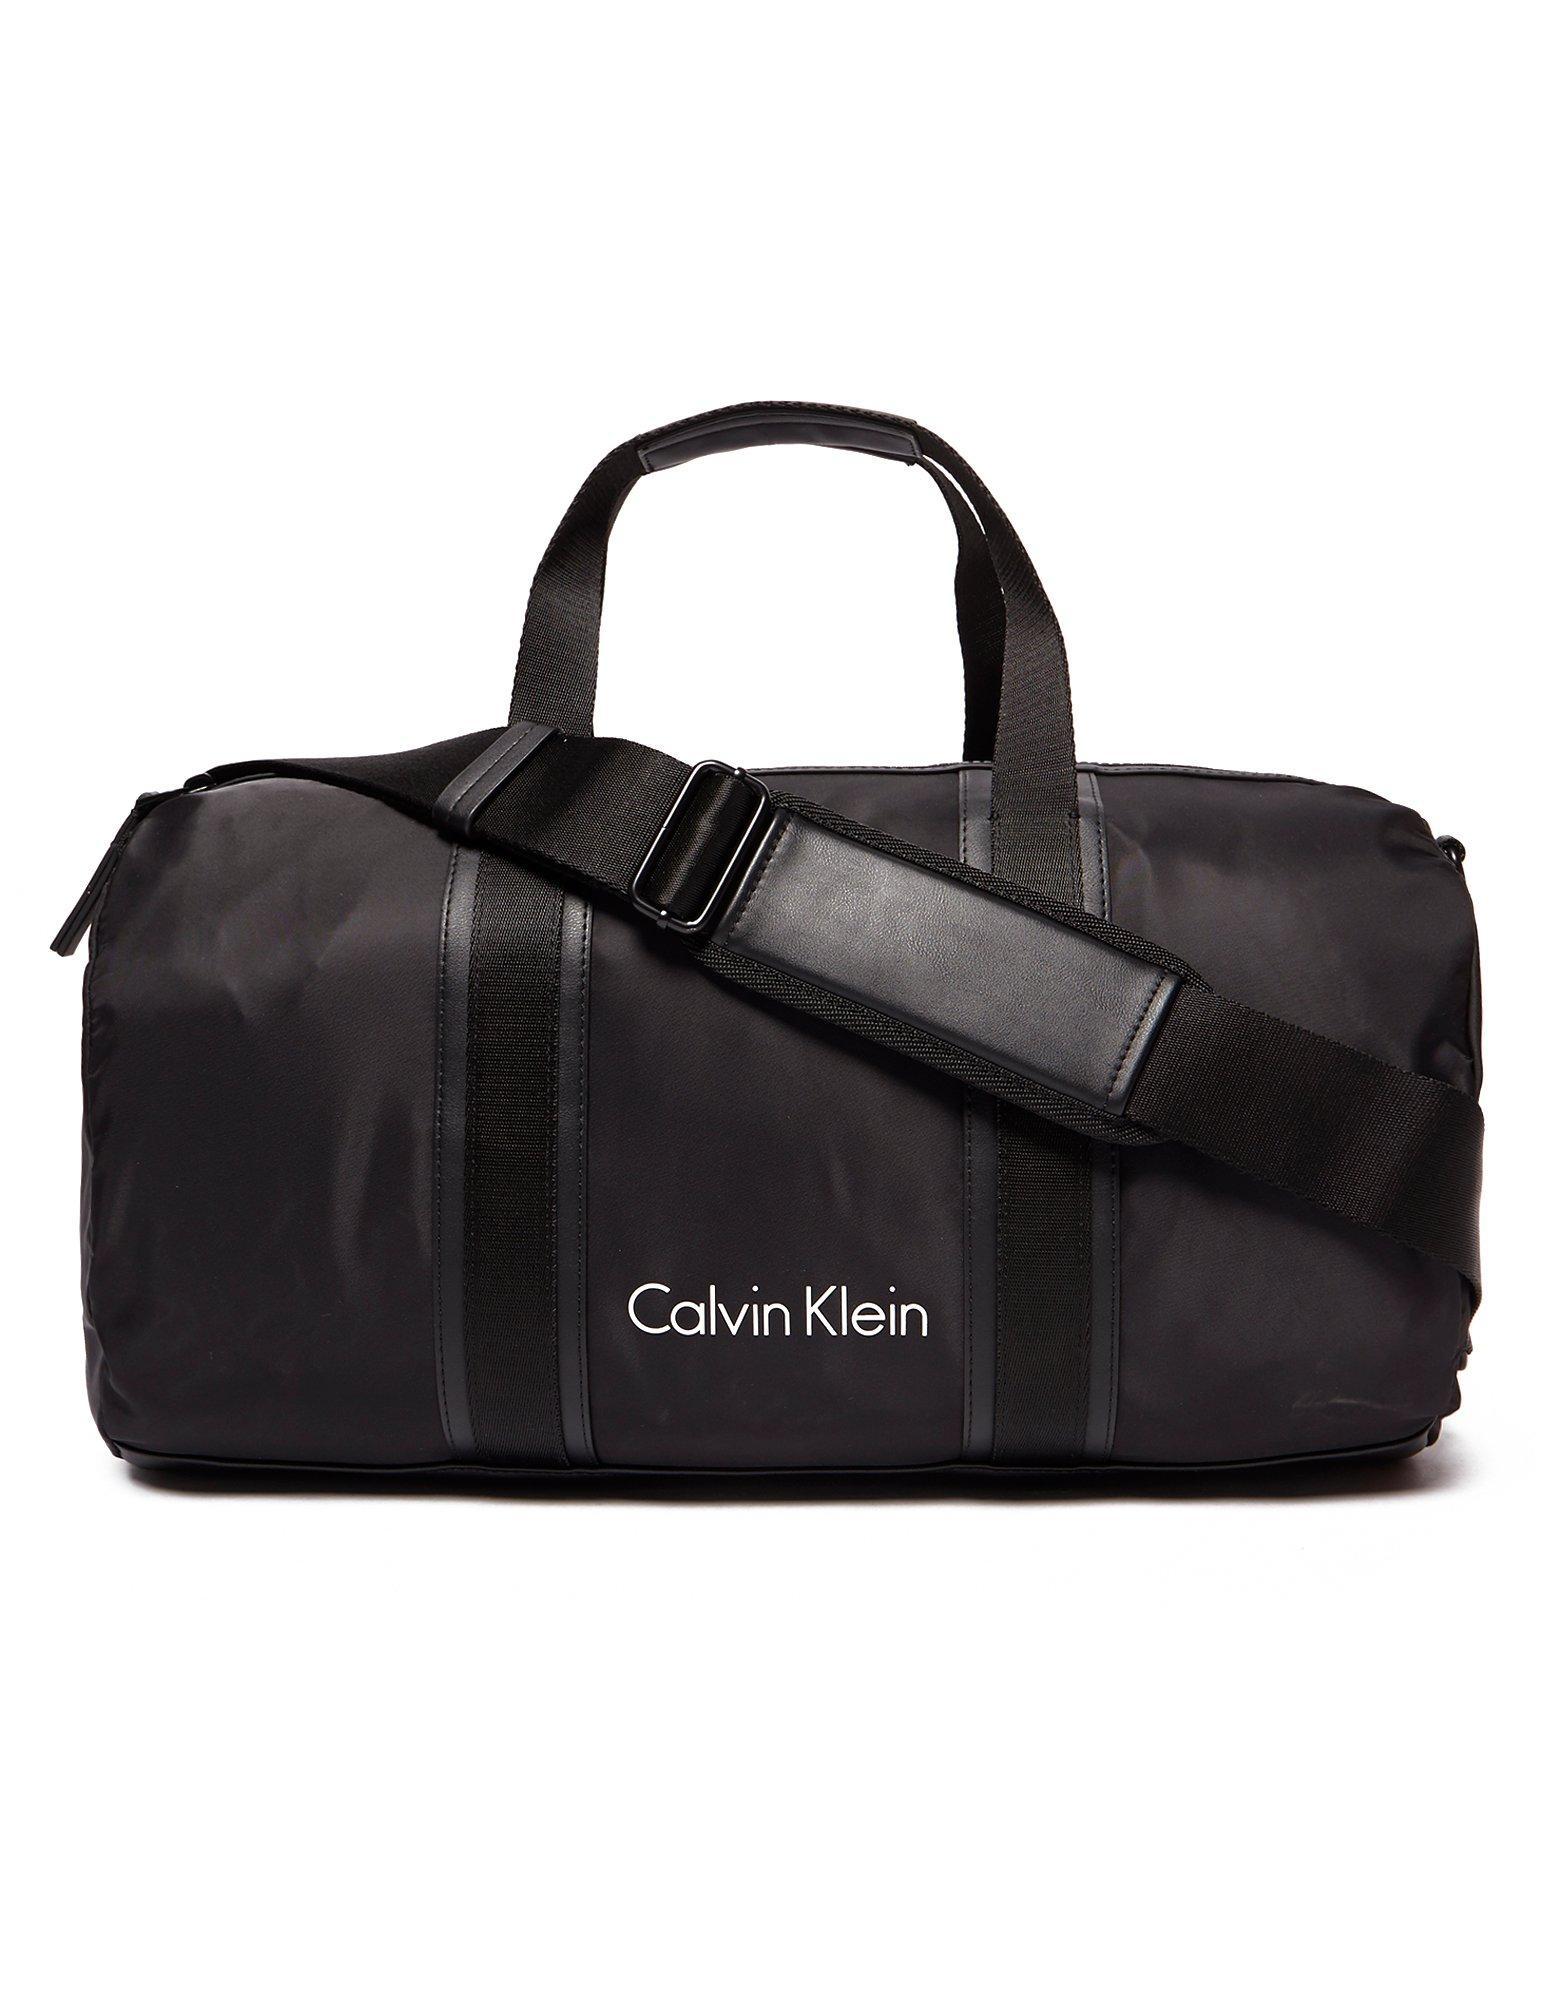 calvin klein duffle luggage